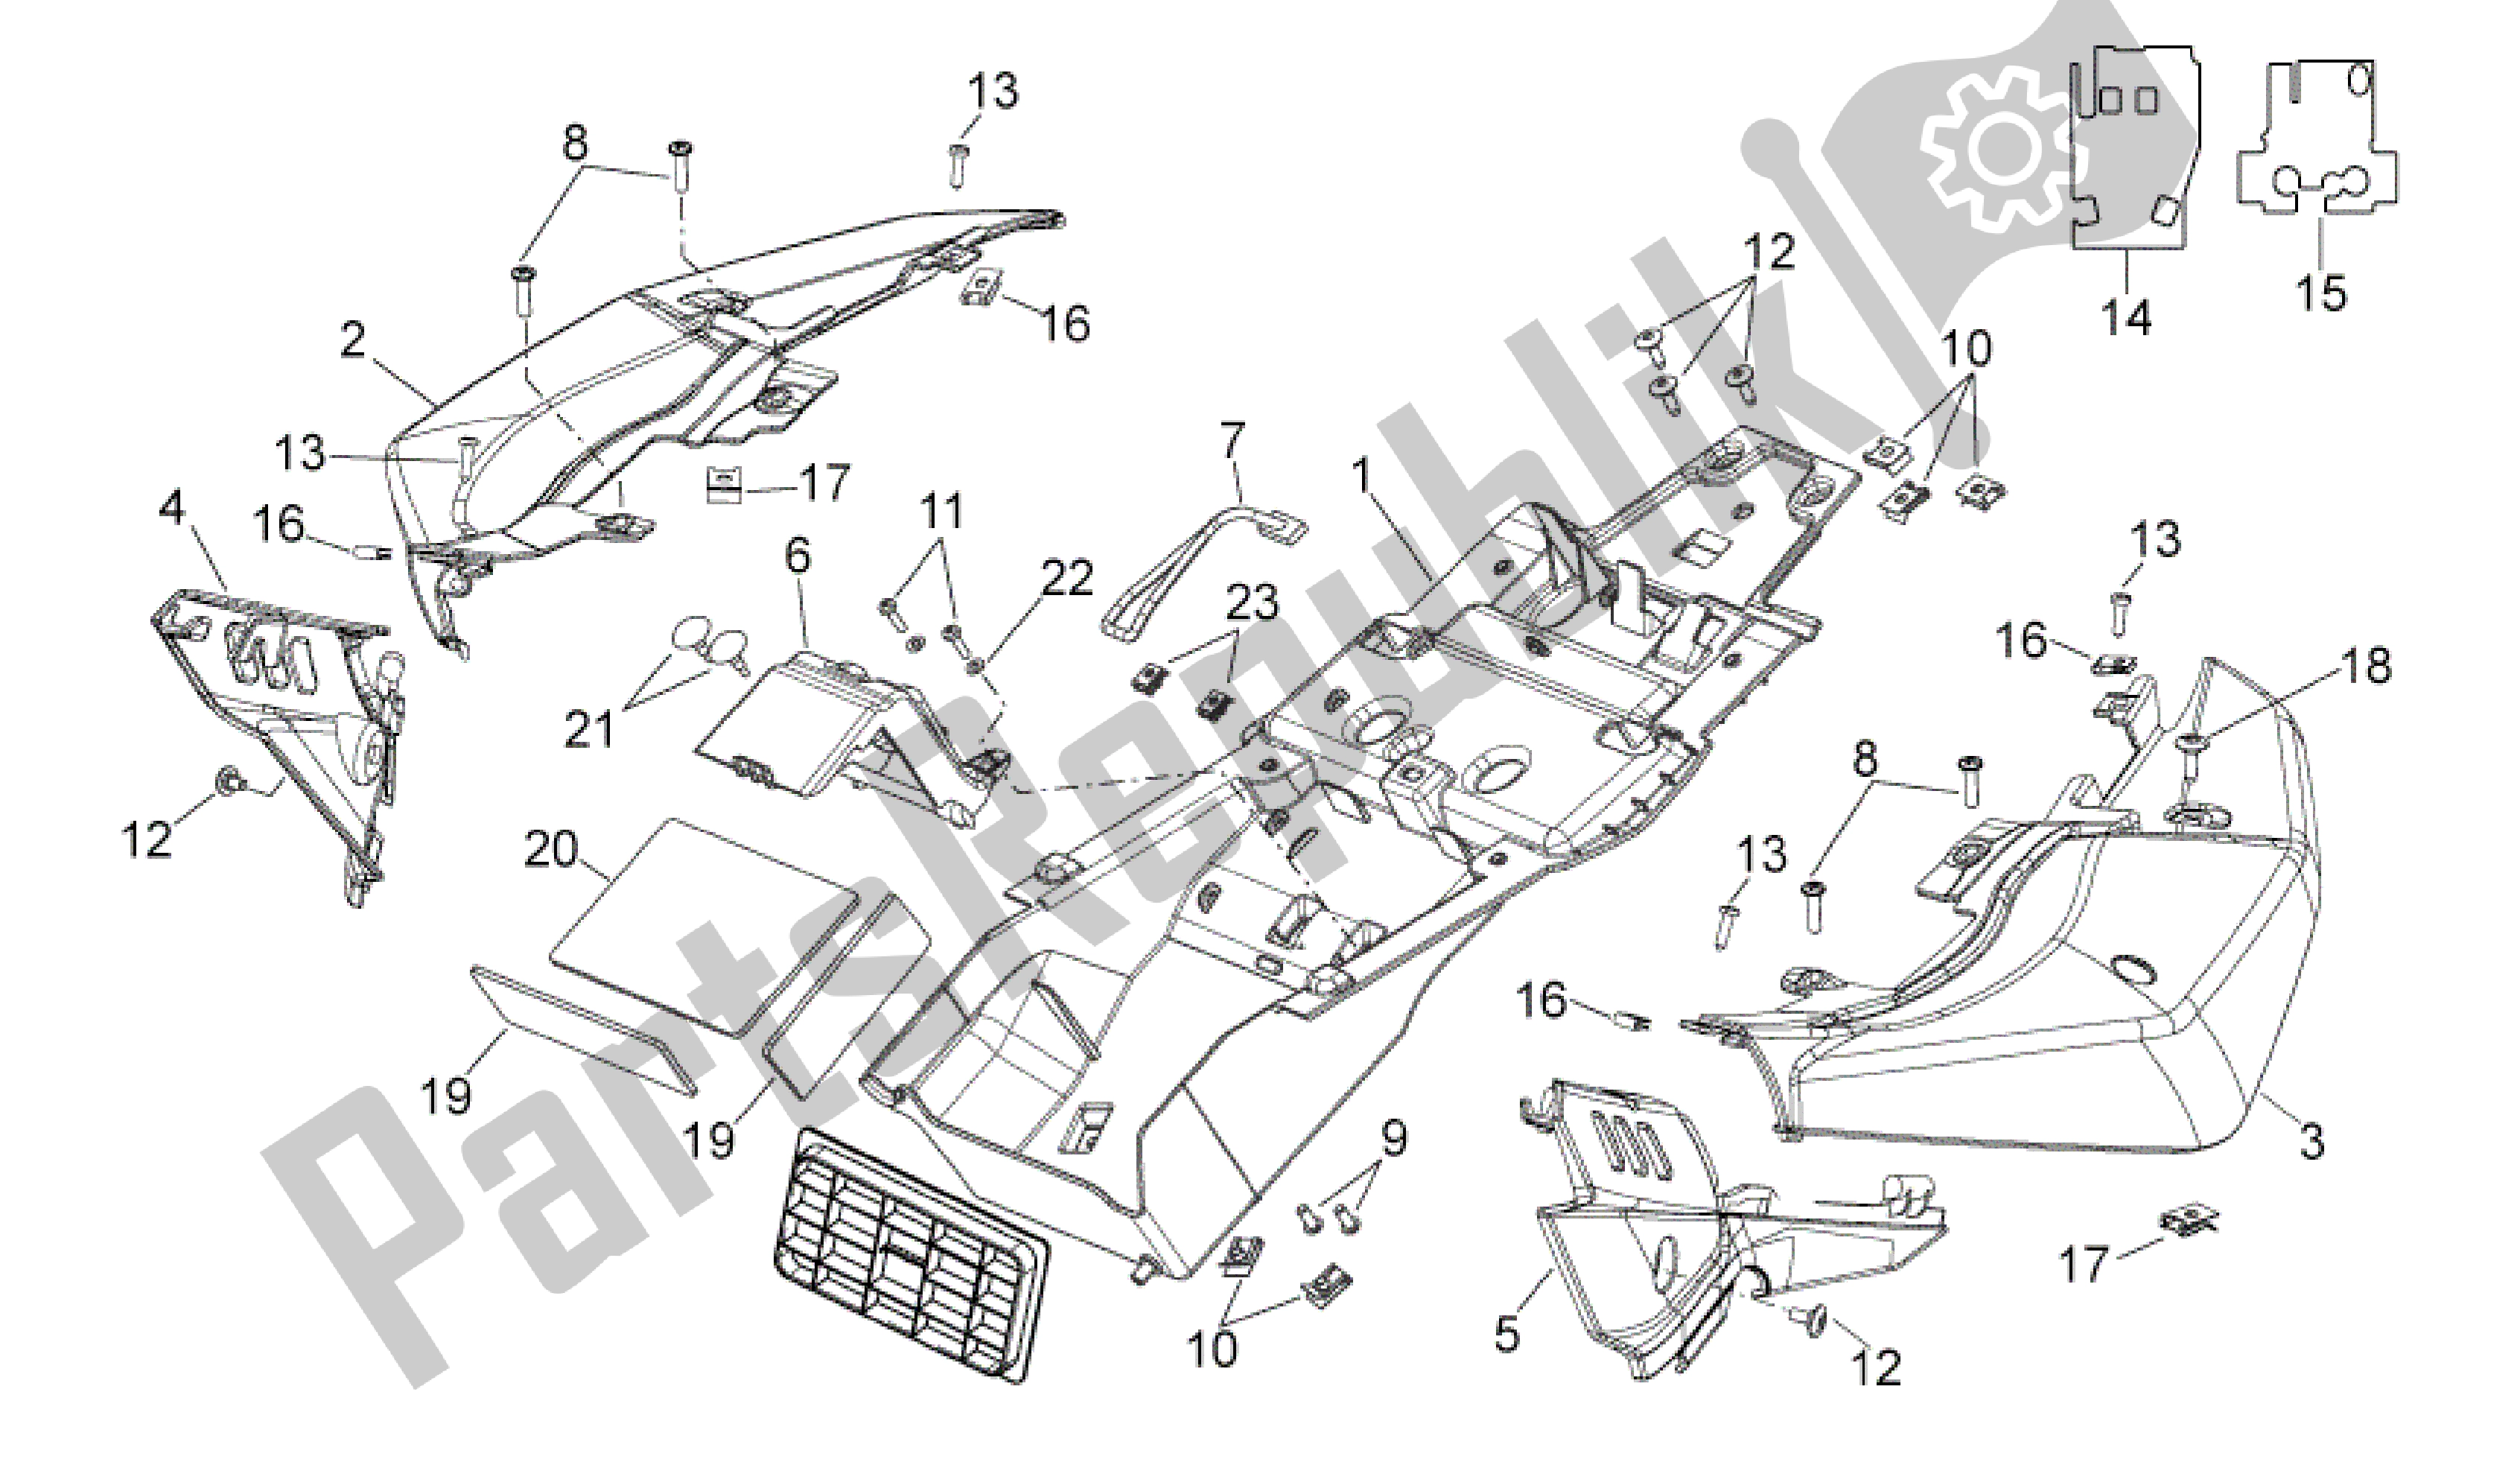 All parts for the Rear Body I of the Aprilia Shiver 750 2010 - 2013